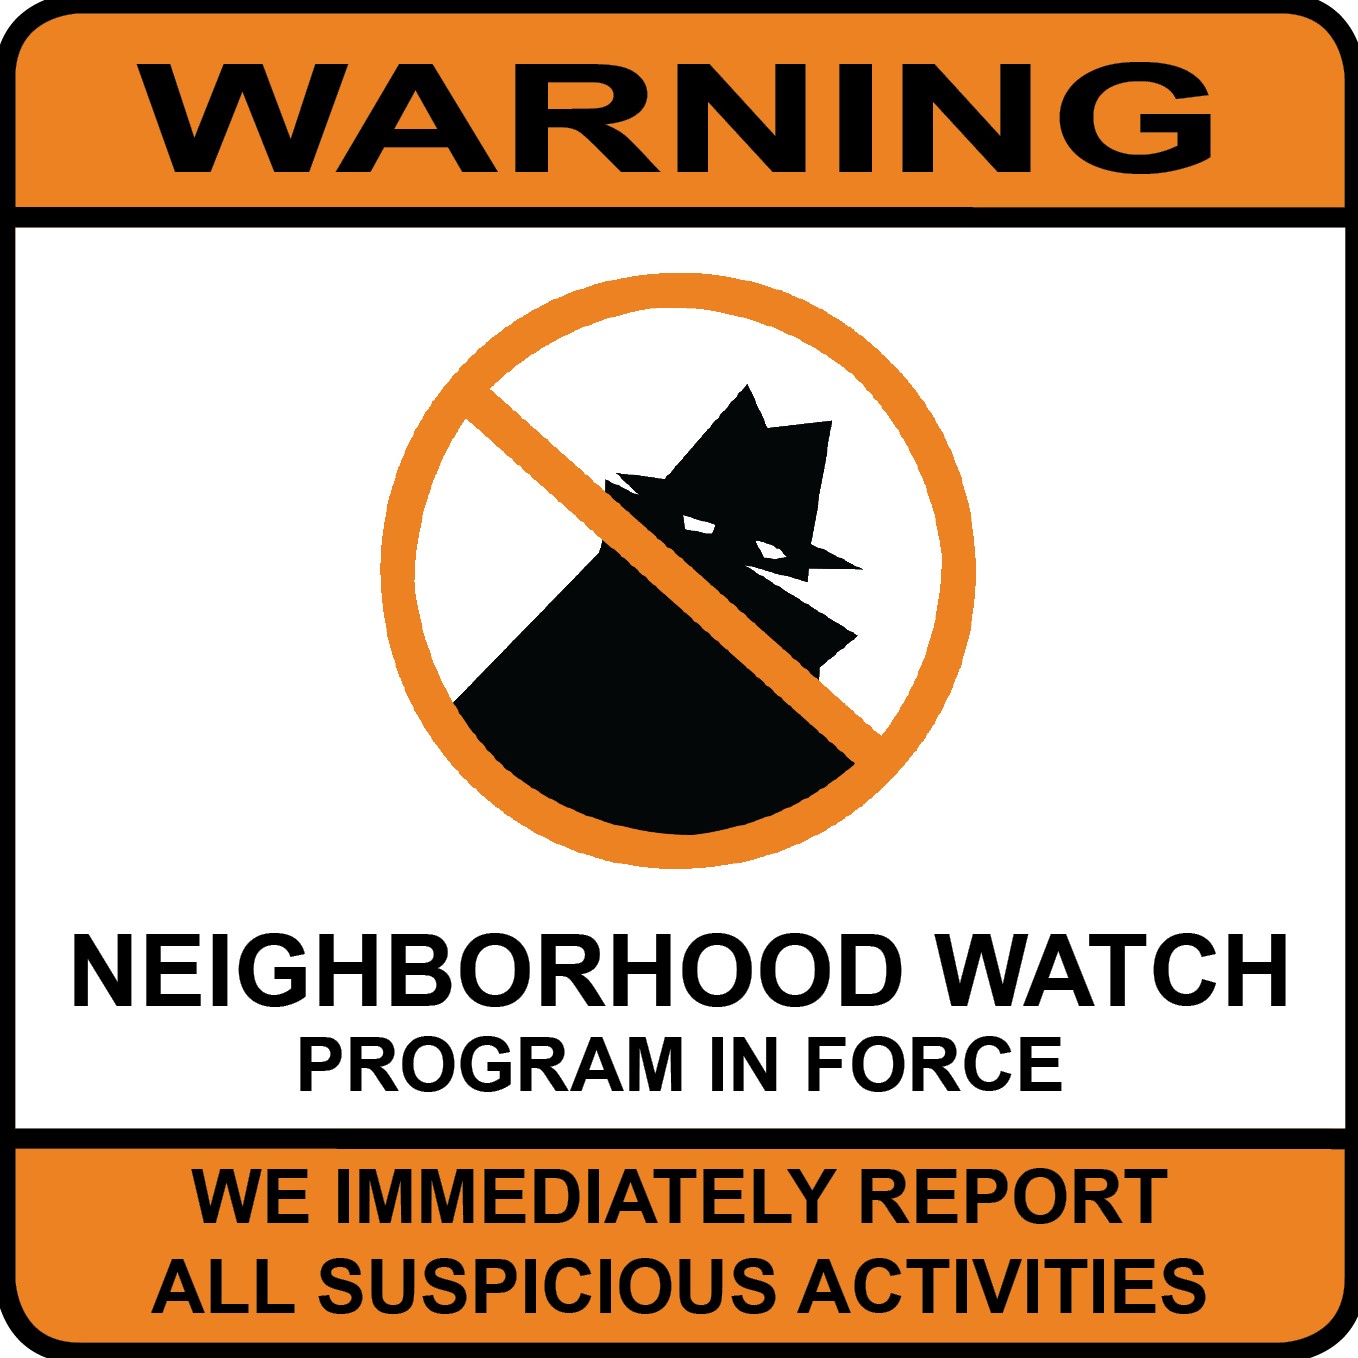 Neighborhood Watch Meeting: Tuesday, April 16